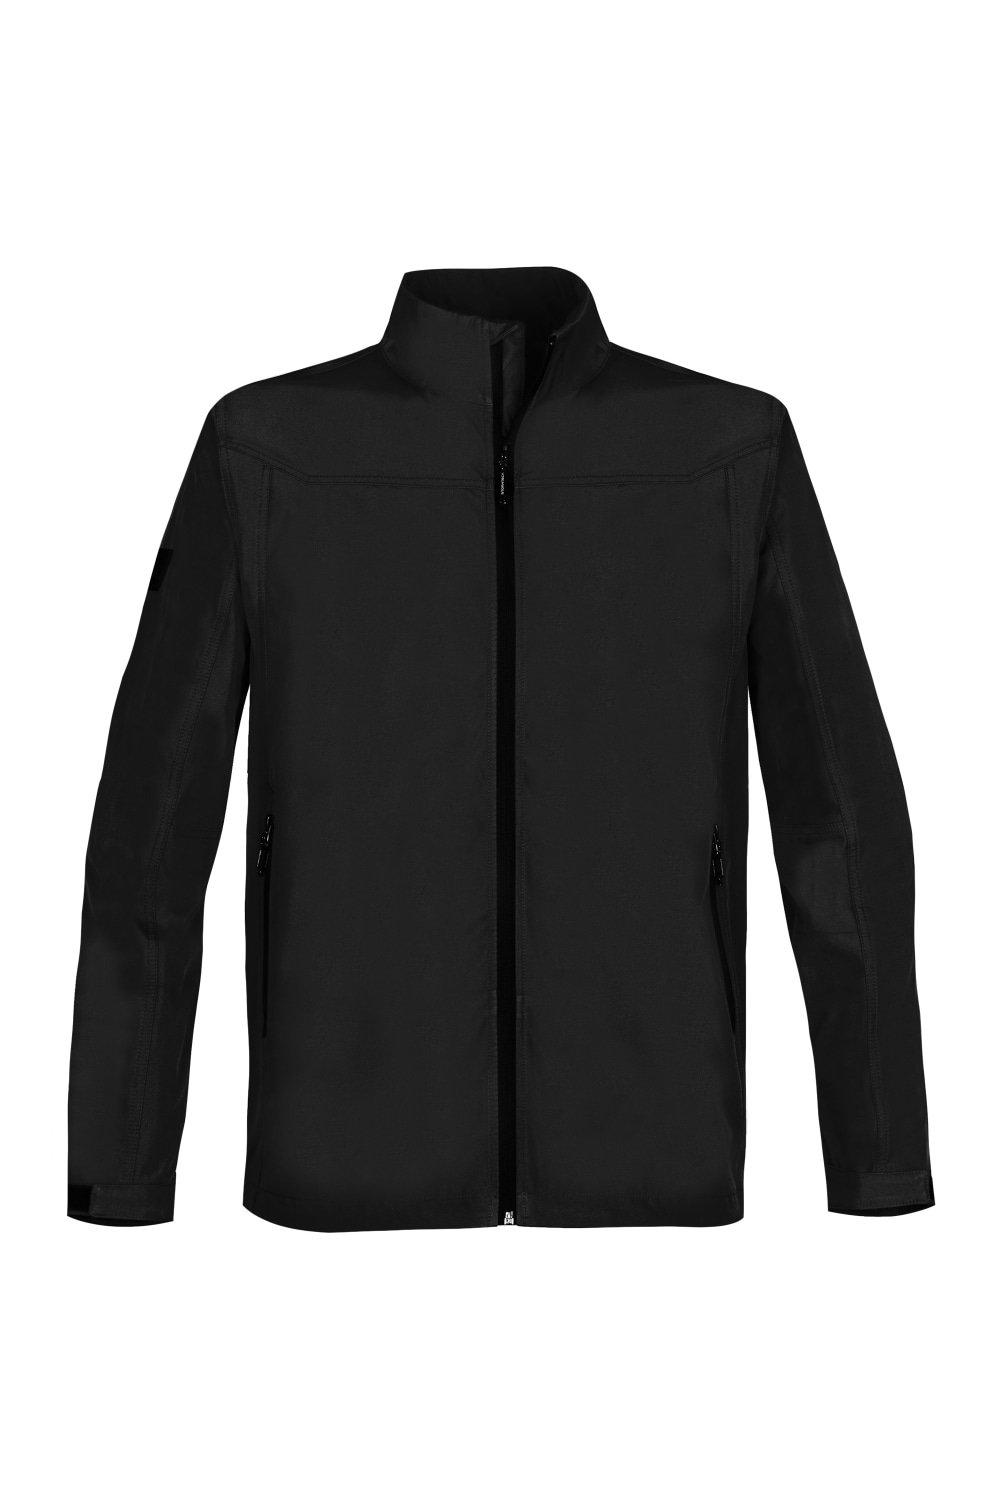 Куртка Endurance Softshell Stormtech, черный куртка oasis softshell stormtech красный